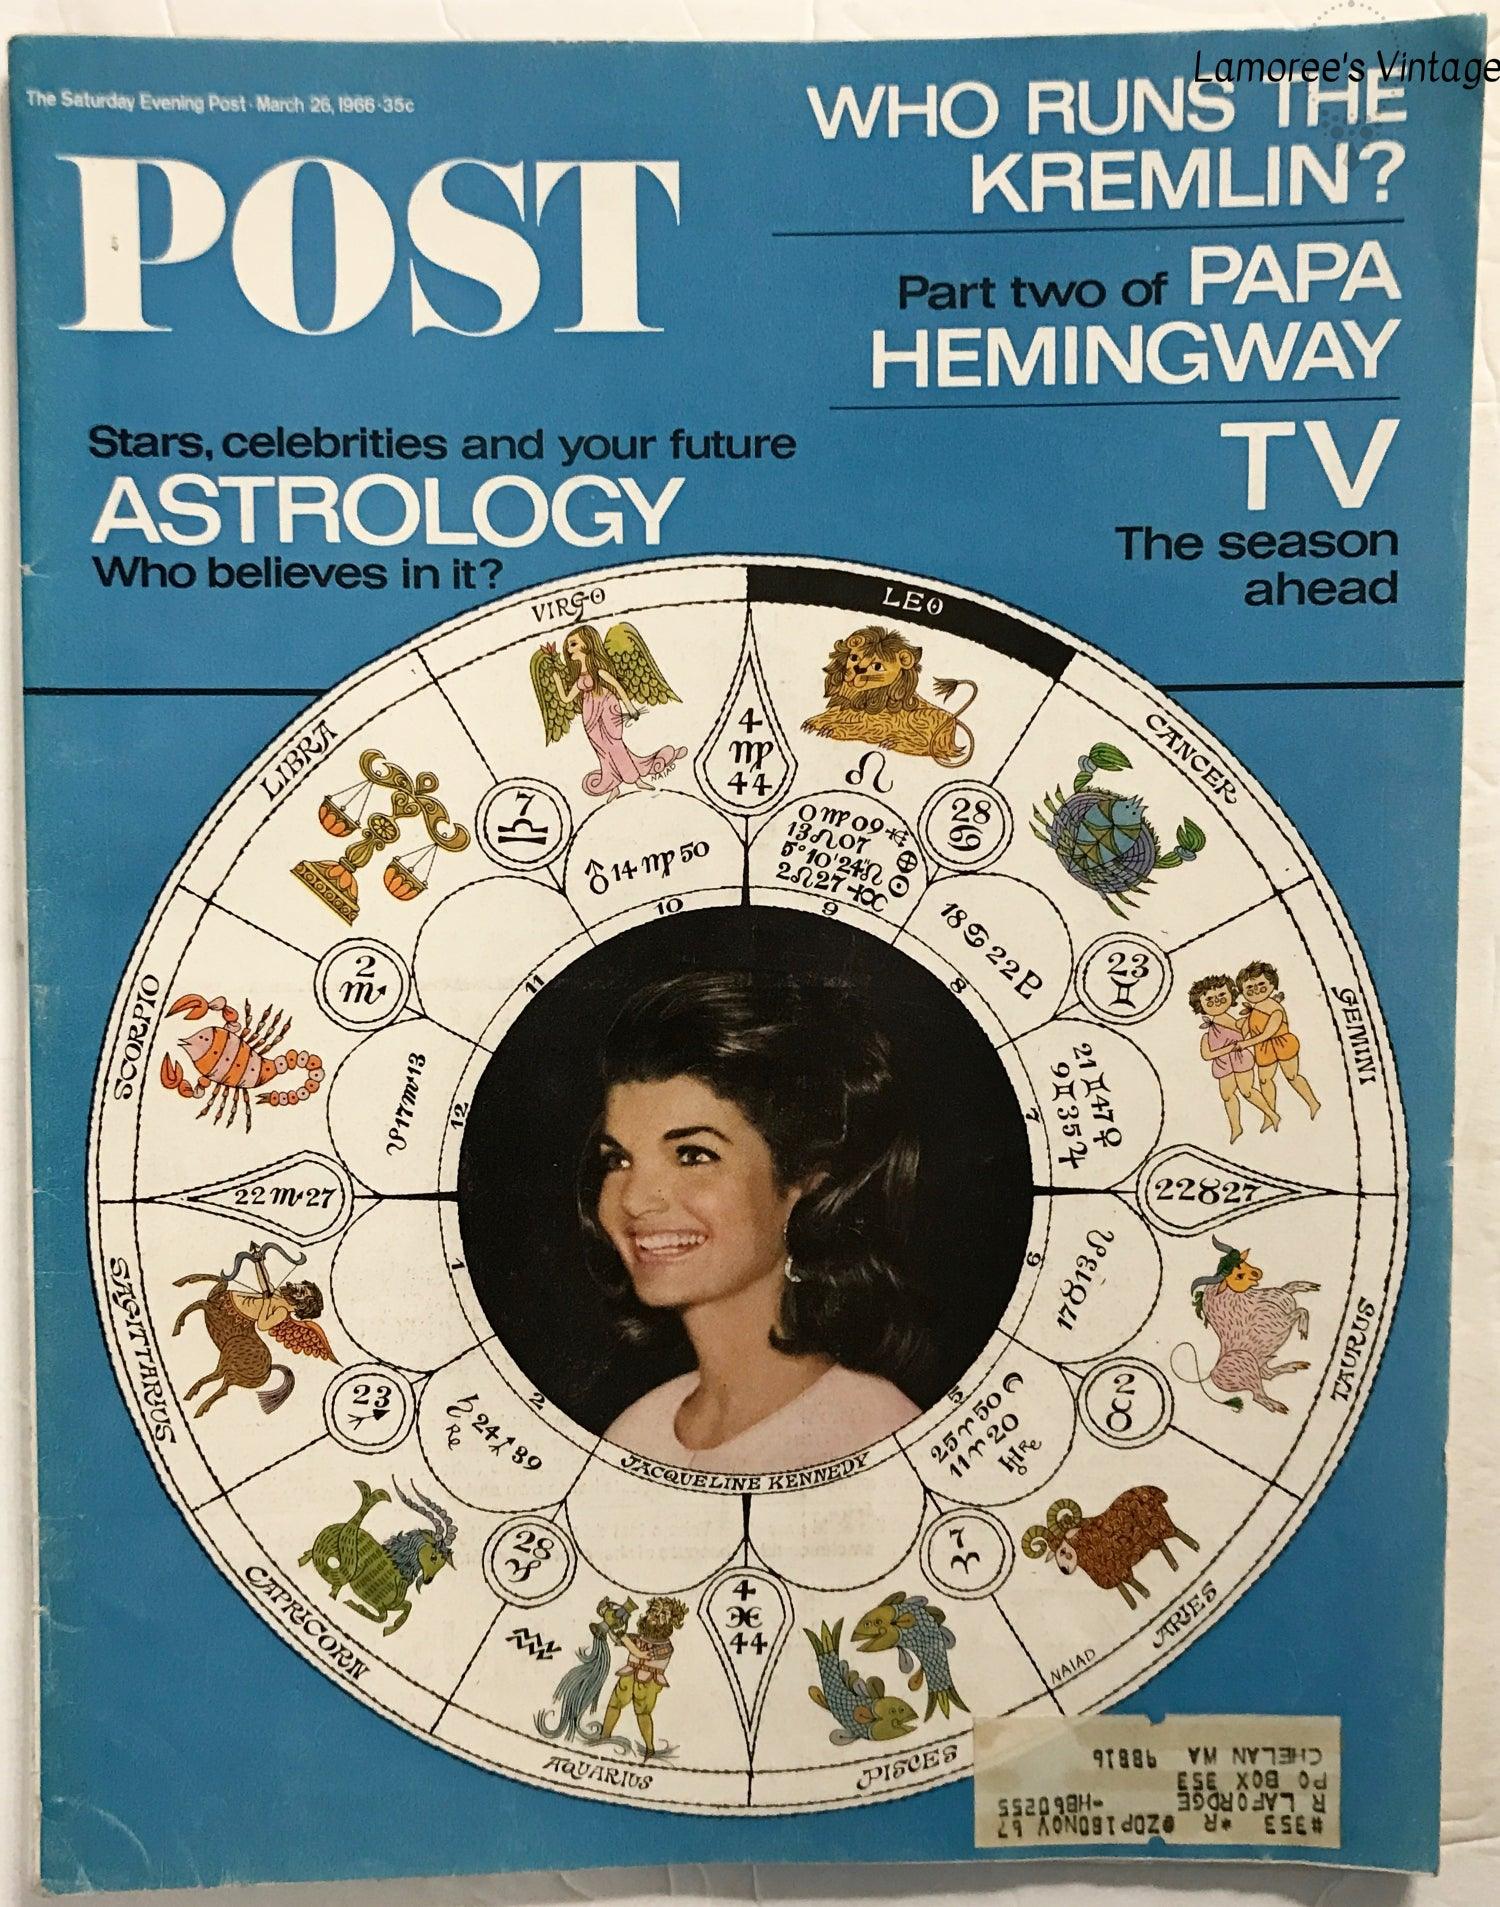 Saturday Evening Post, March 25, 1966 - Lamoree’s Vintage